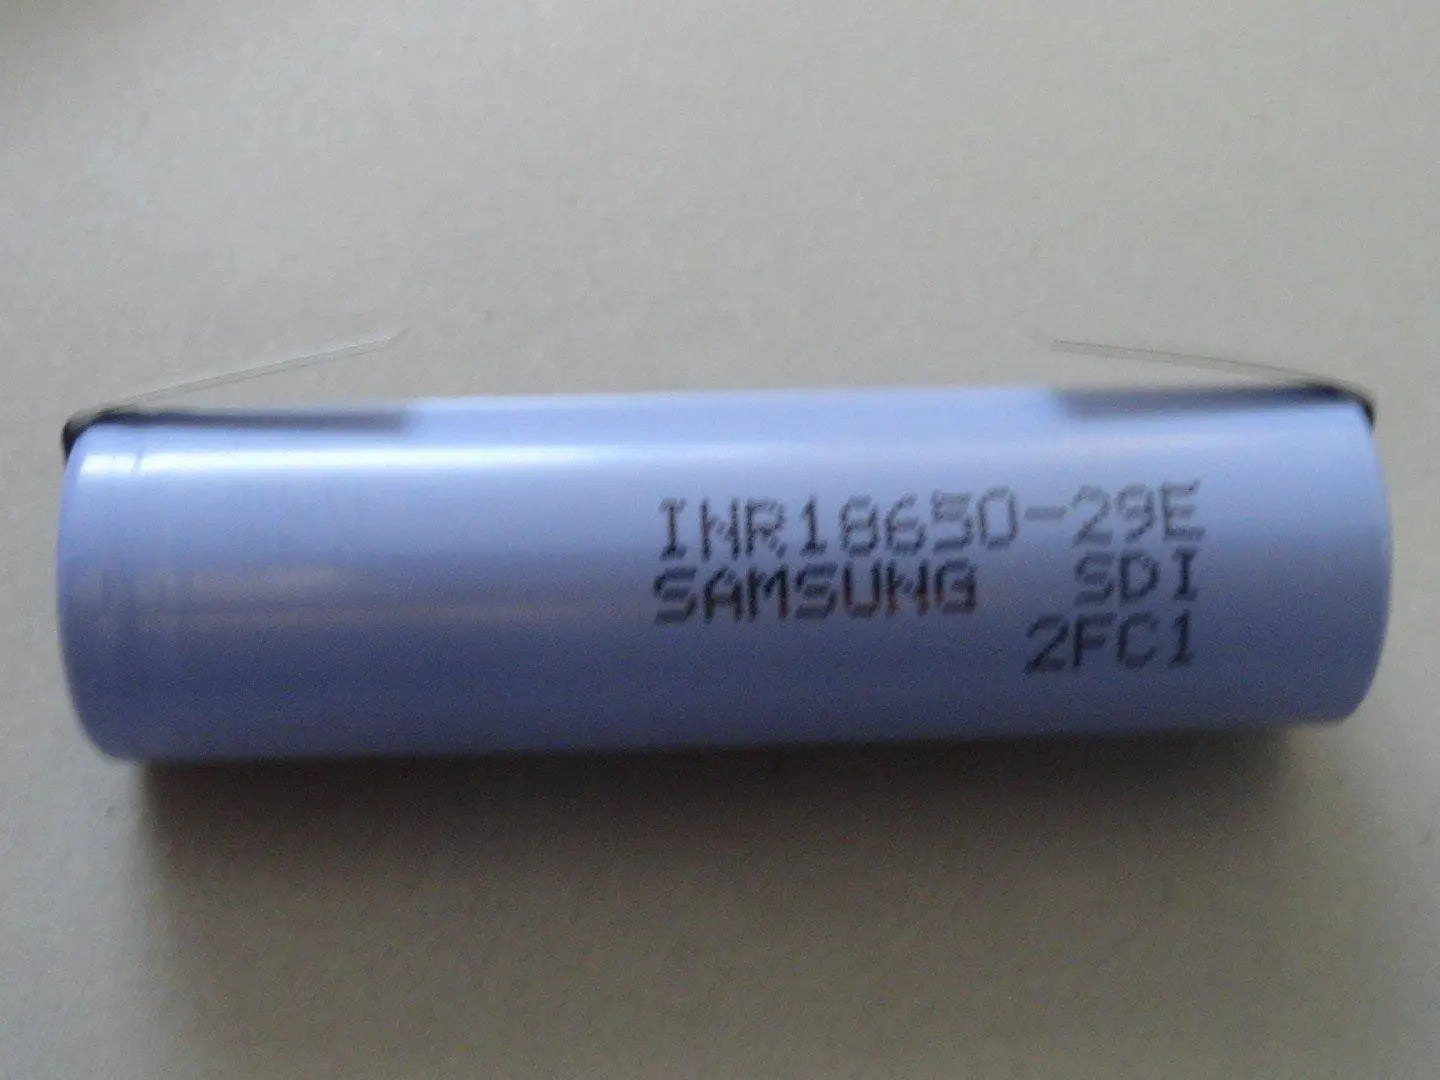 Accumulatore Lithio C-Lamelle parallel INR18650-29E 3,7v-2900MAH Panasonic PANASONIC